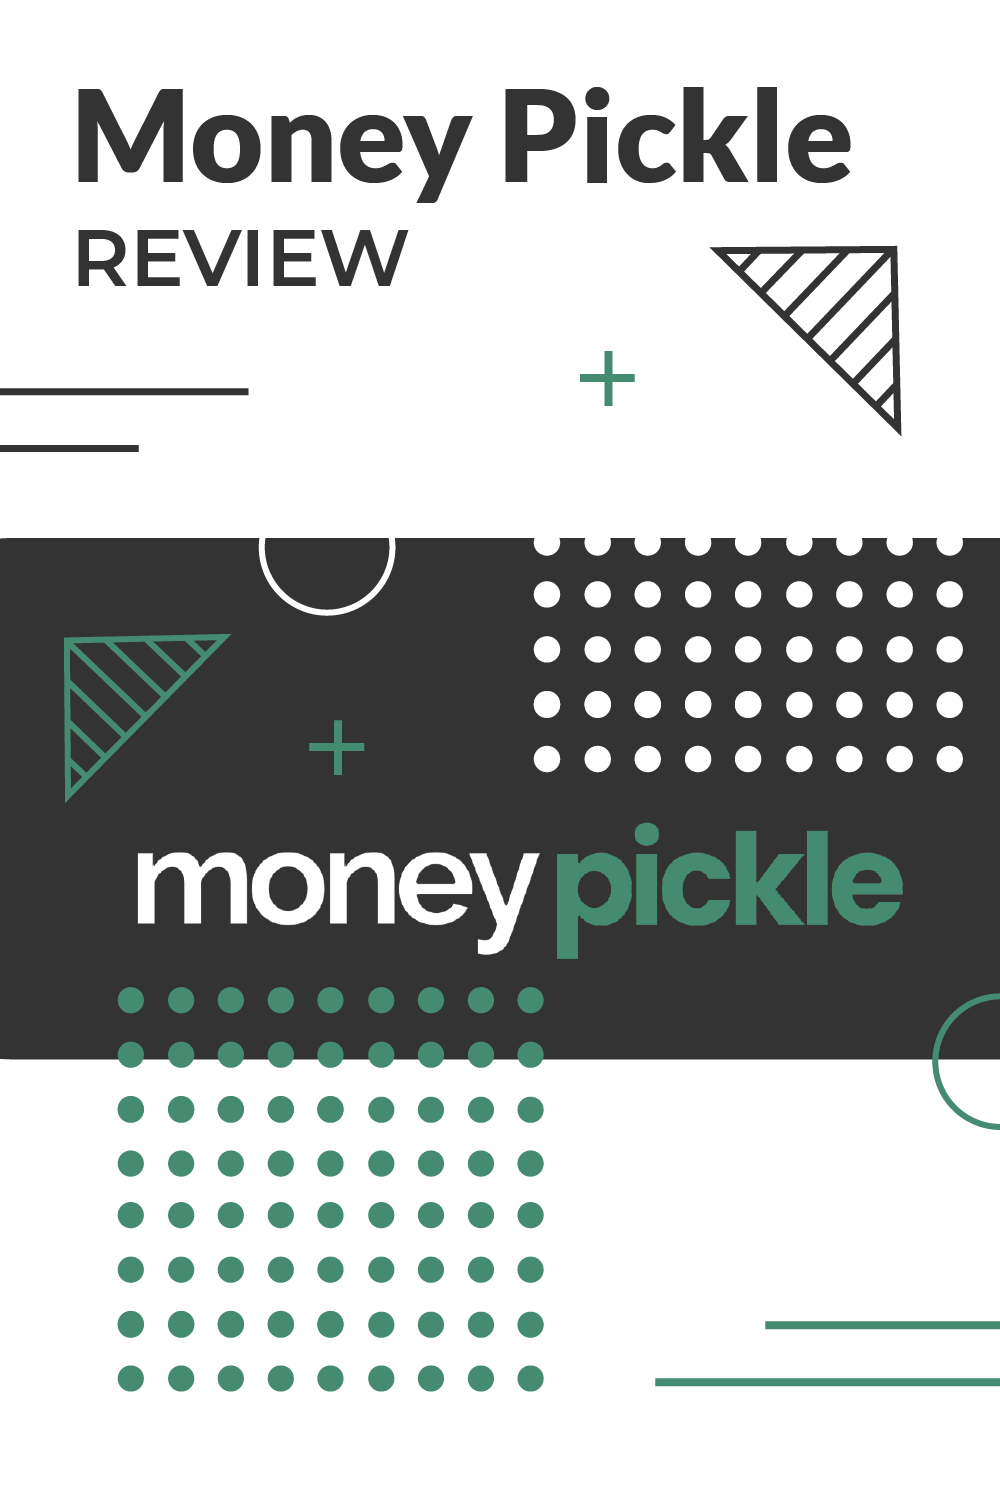 Money Pickle pinterest image